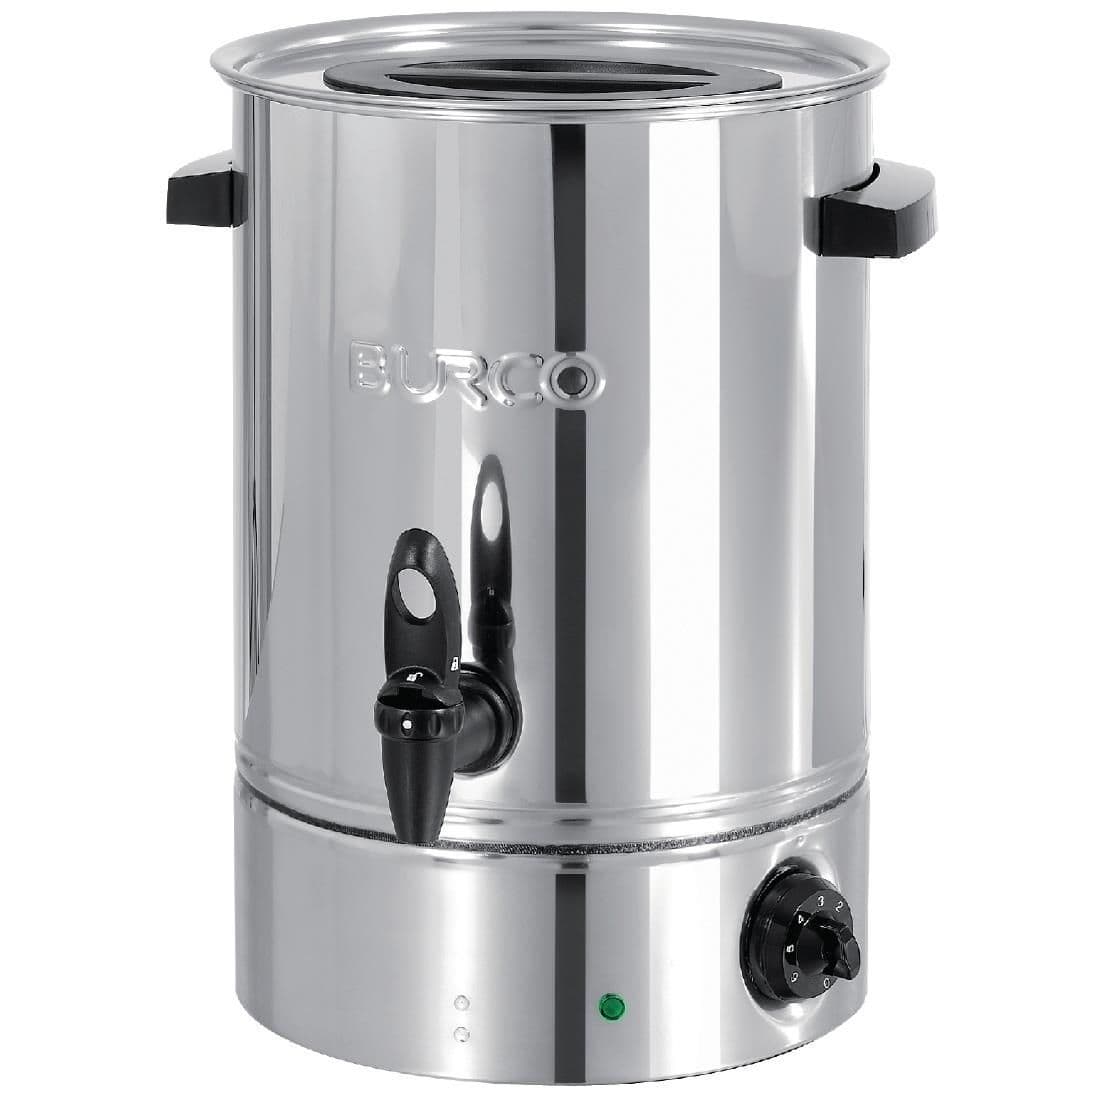 Burco Manual Fill Water Boiler 10Ltr MFCT10ST JD Catering Equipment Solutions Ltd